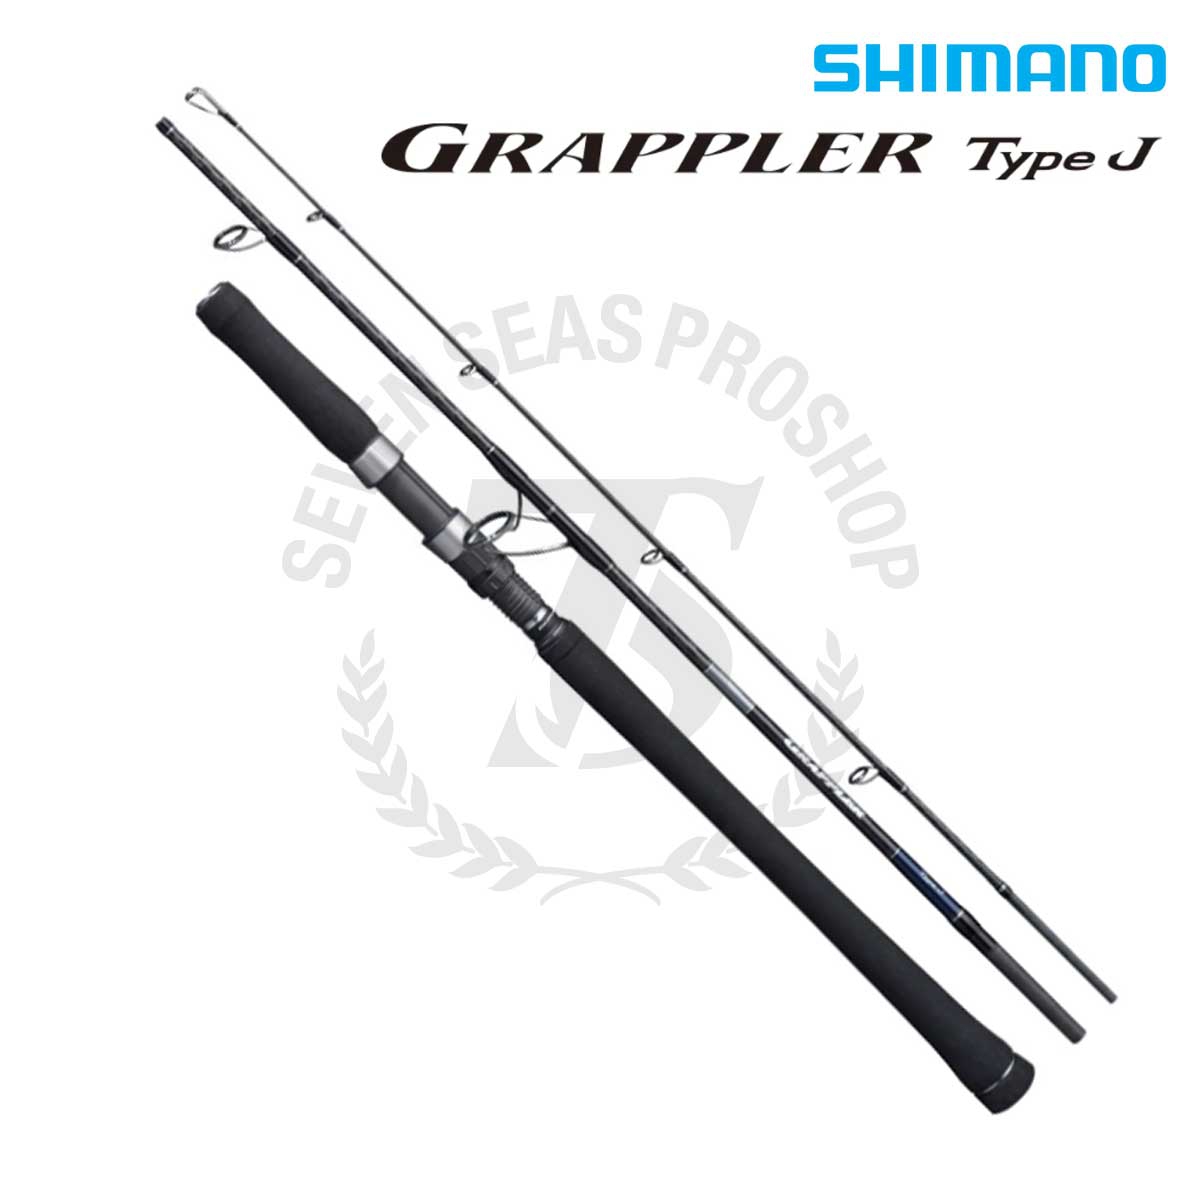 Shimano Grappler Type-J 3 Piece #S60-4/3 (Spinning) - 7 SEAS PROSHOP  (THAILAND)